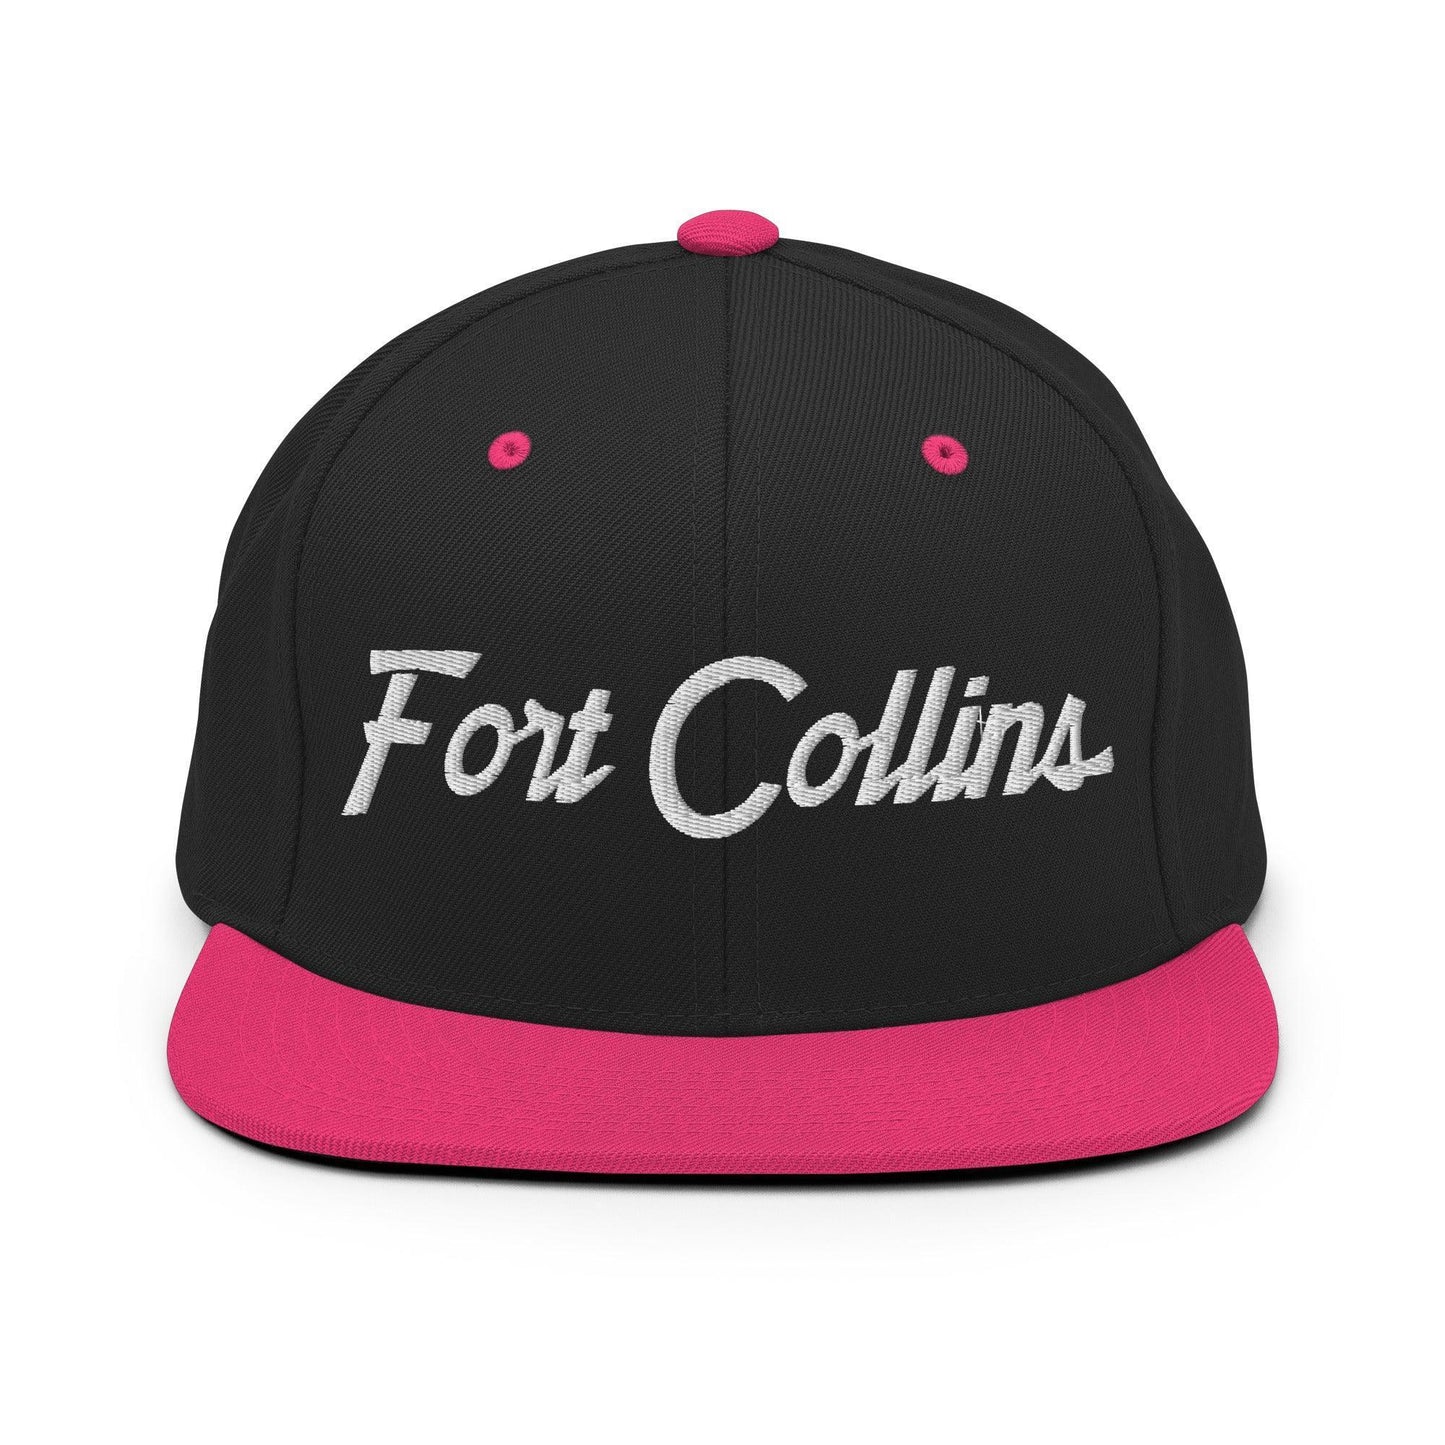 Fort Collins Script Snapback Hat Black Neon Pink